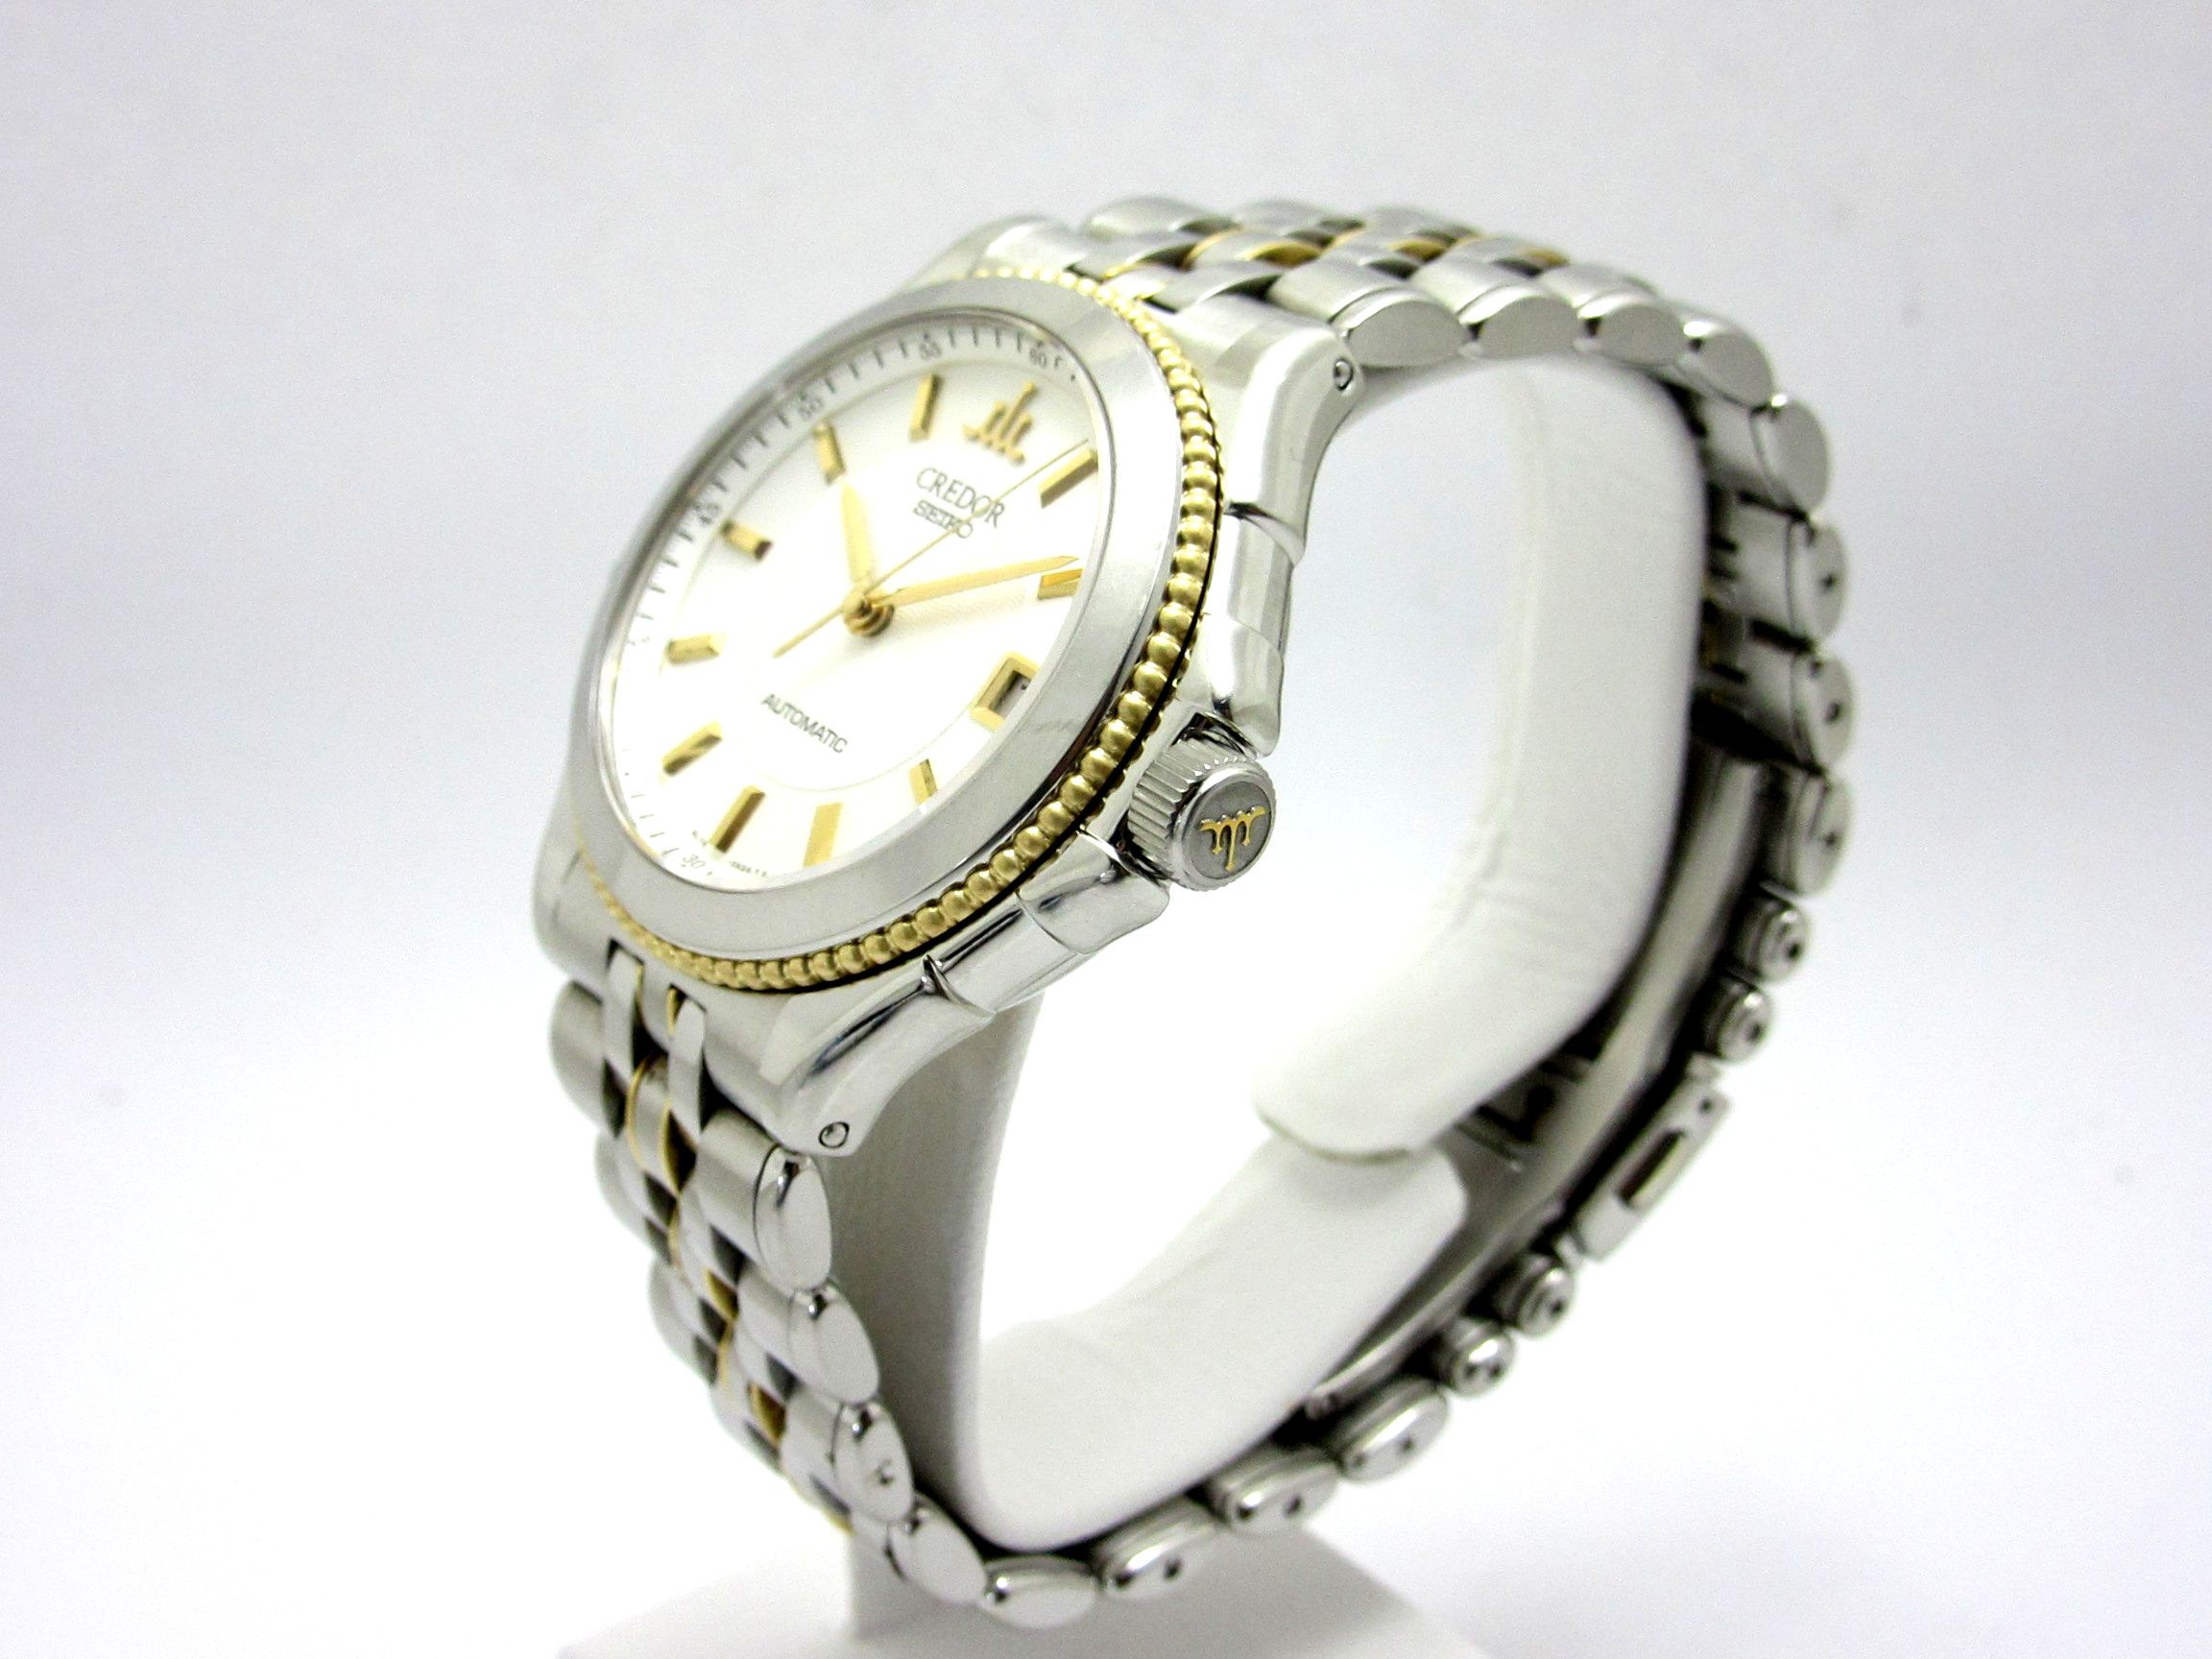 SEIKO セイコー メンズ腕時計 クレドール パシフィーク 8L75-0A50 SS ホワイト(白)文字盤 自動巻き 仕上げ済